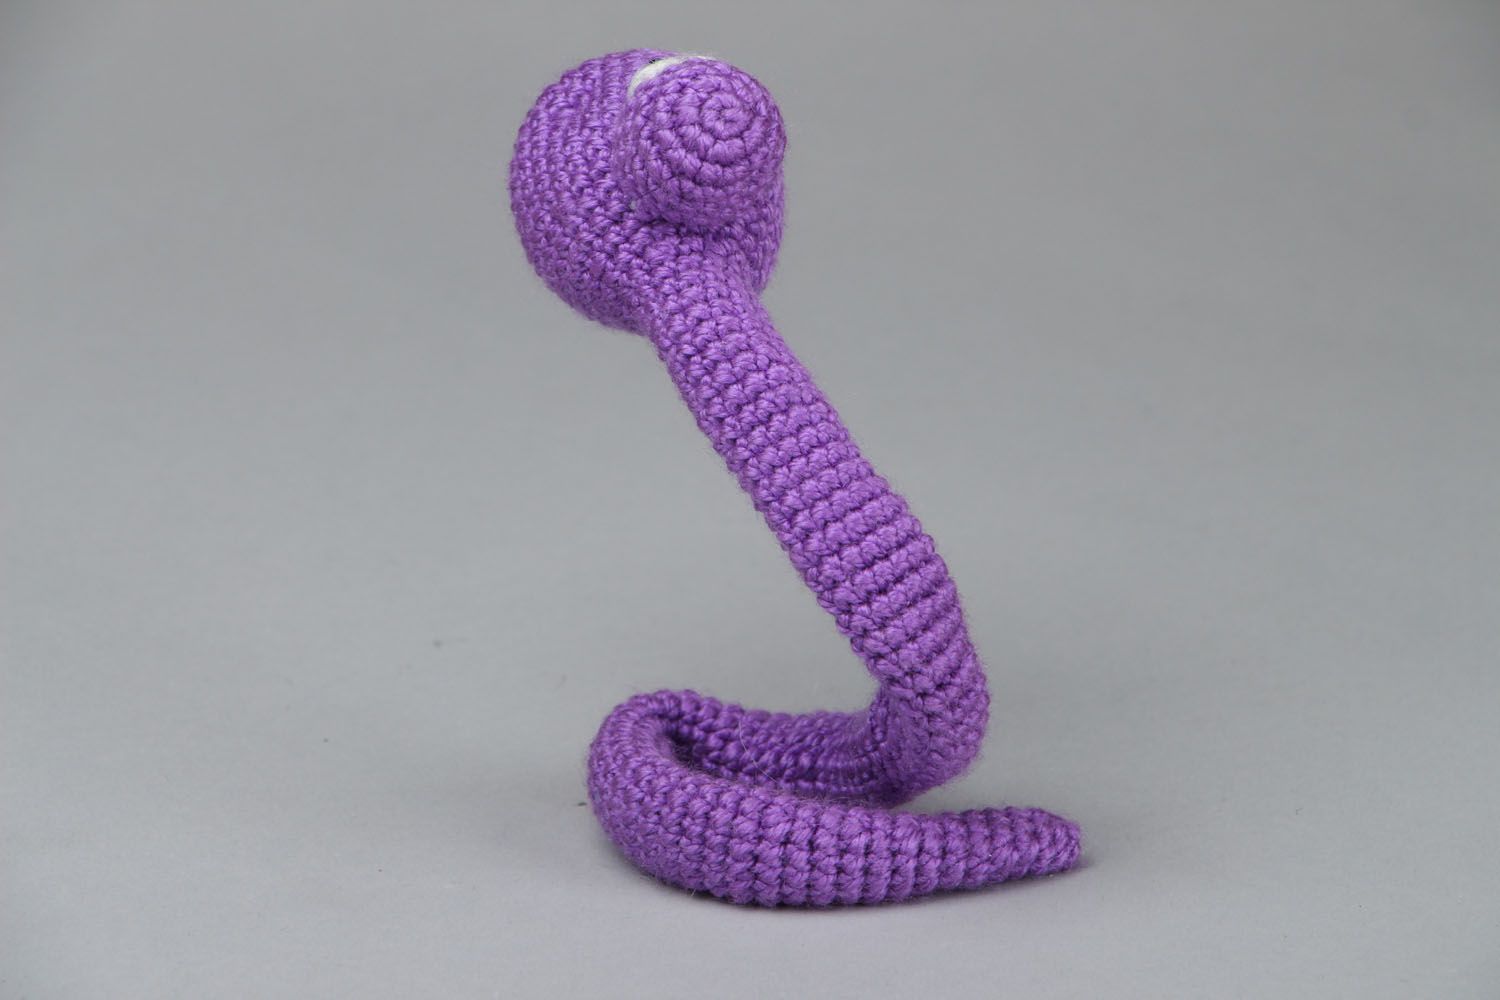 Homemade toy Snake photo 3